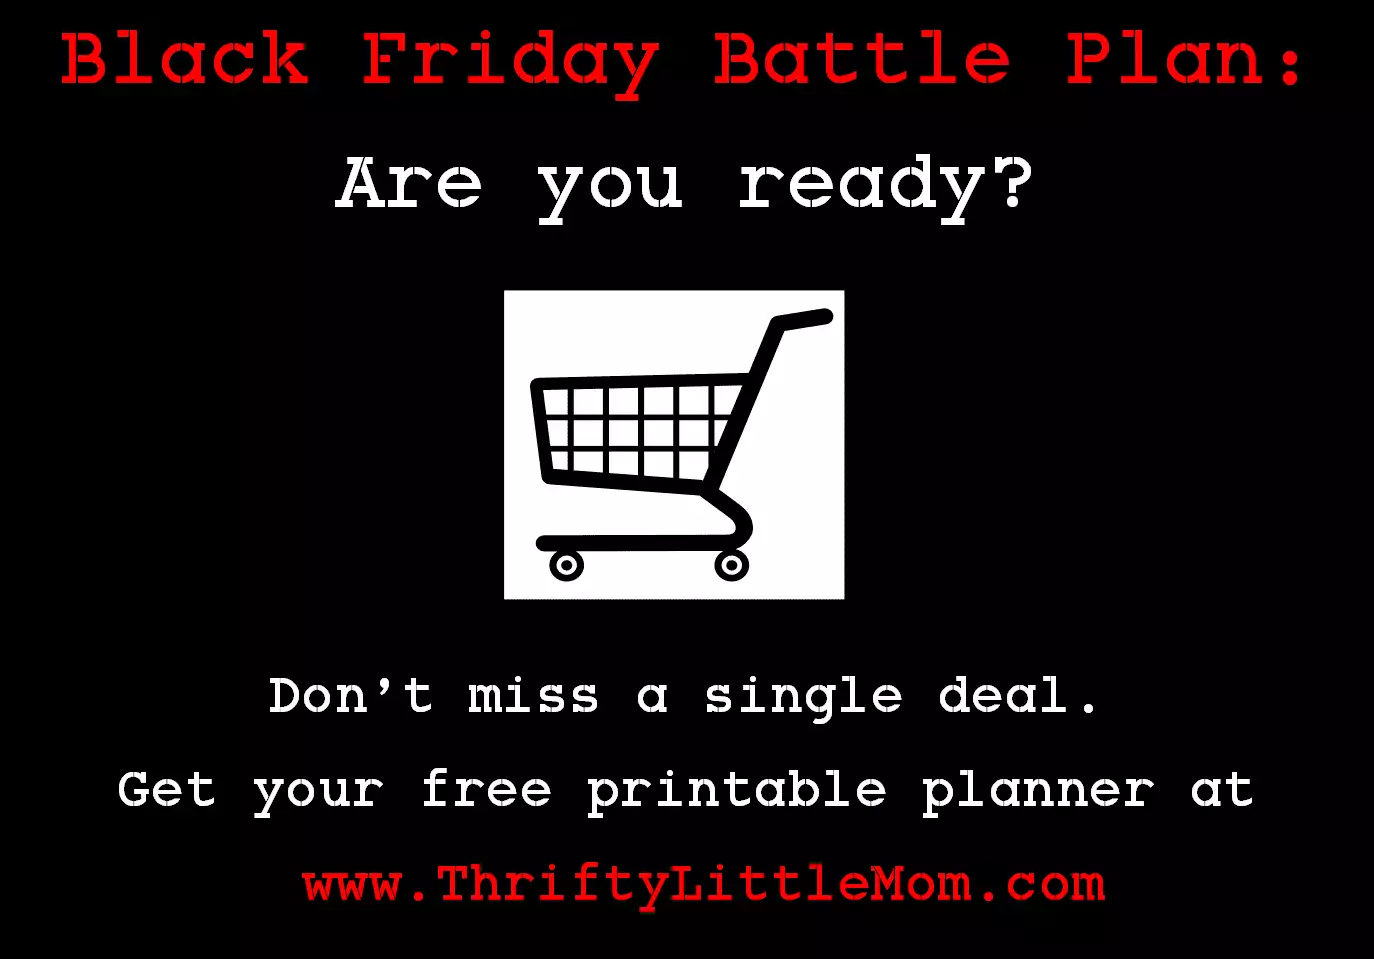 Black Friday Shopping List & Battle Plan